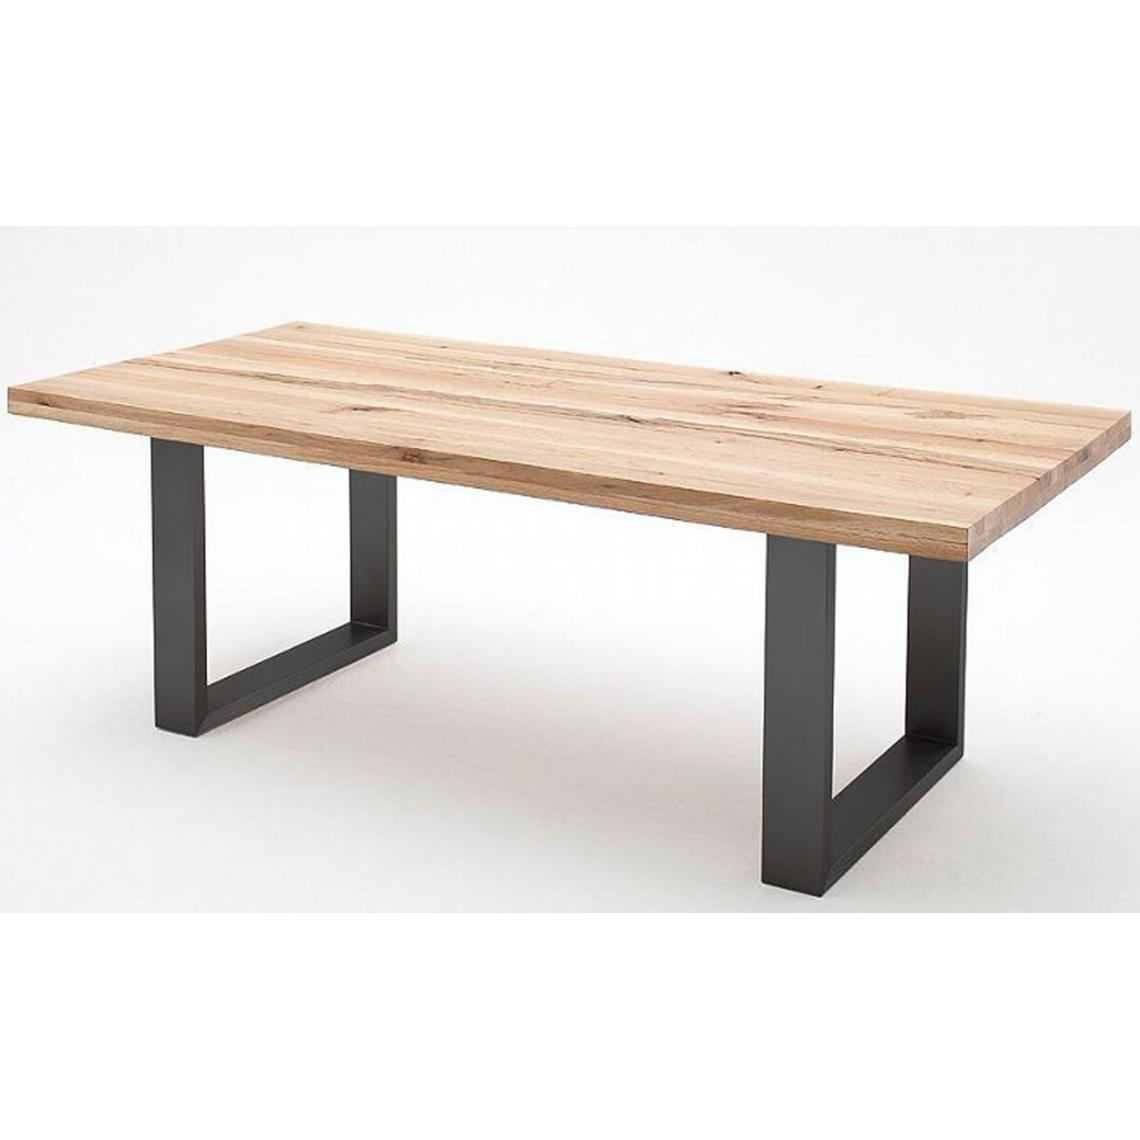 Pegane - Table à manger en chêne sauvage massif/anthracite - L.180 x H.76 x P.100 cm -PEGANE- - Tables à manger